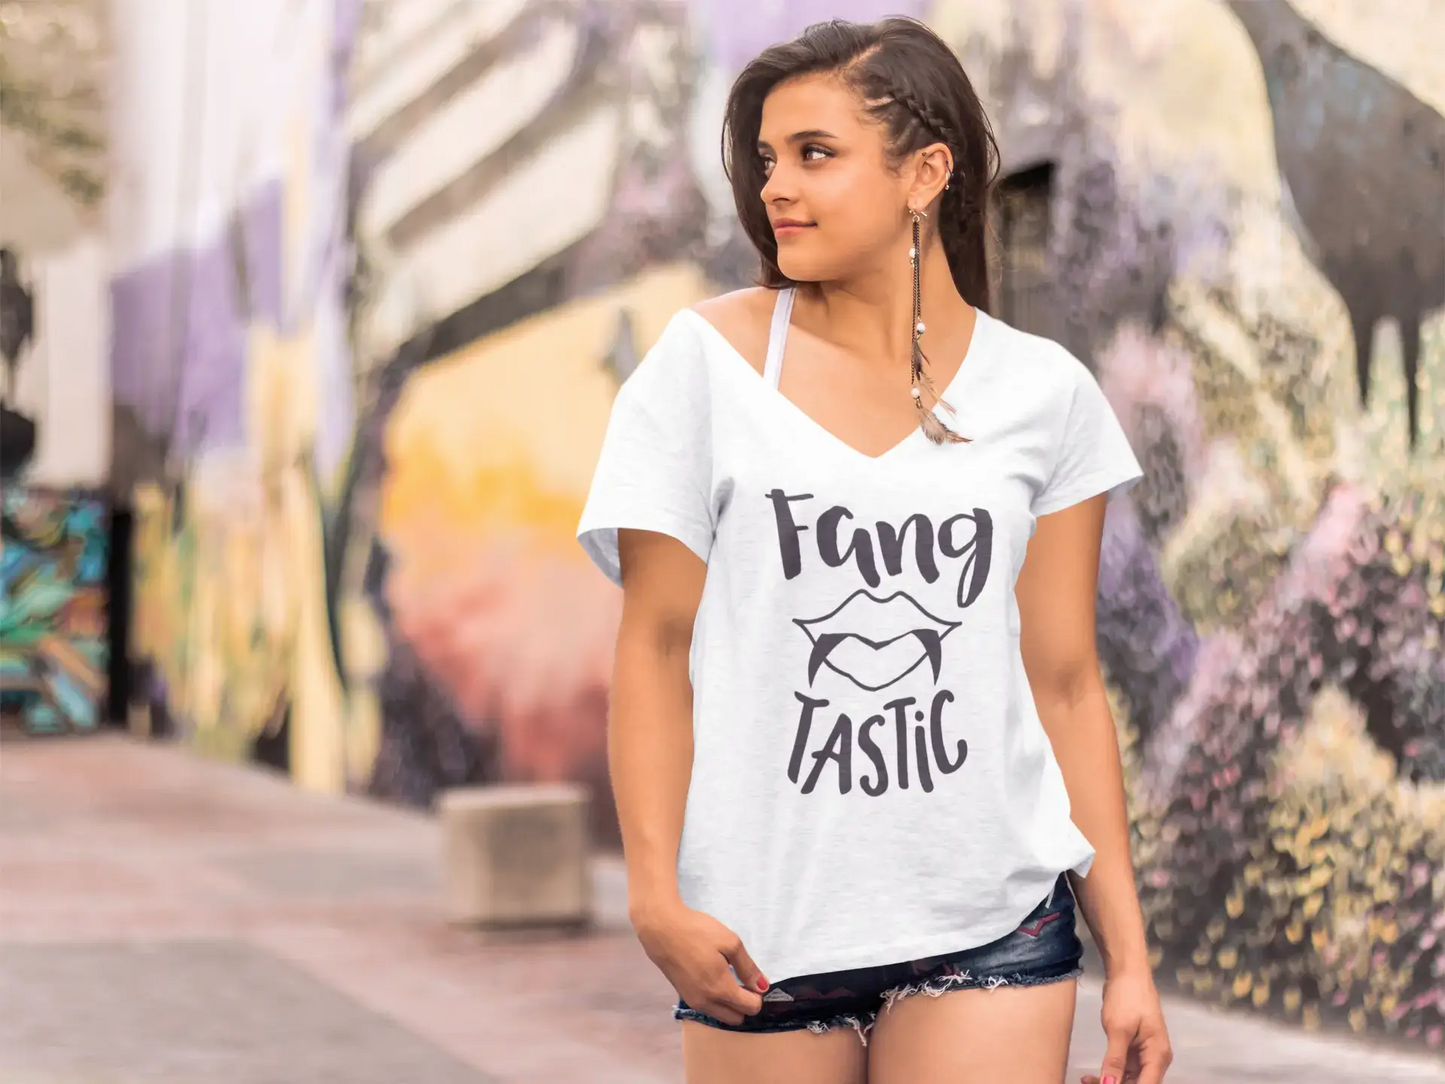 ULTRABASIC T-Shirt Femme Fang Tastic - Fantastique T-Shirt à Manches Courtes Tops